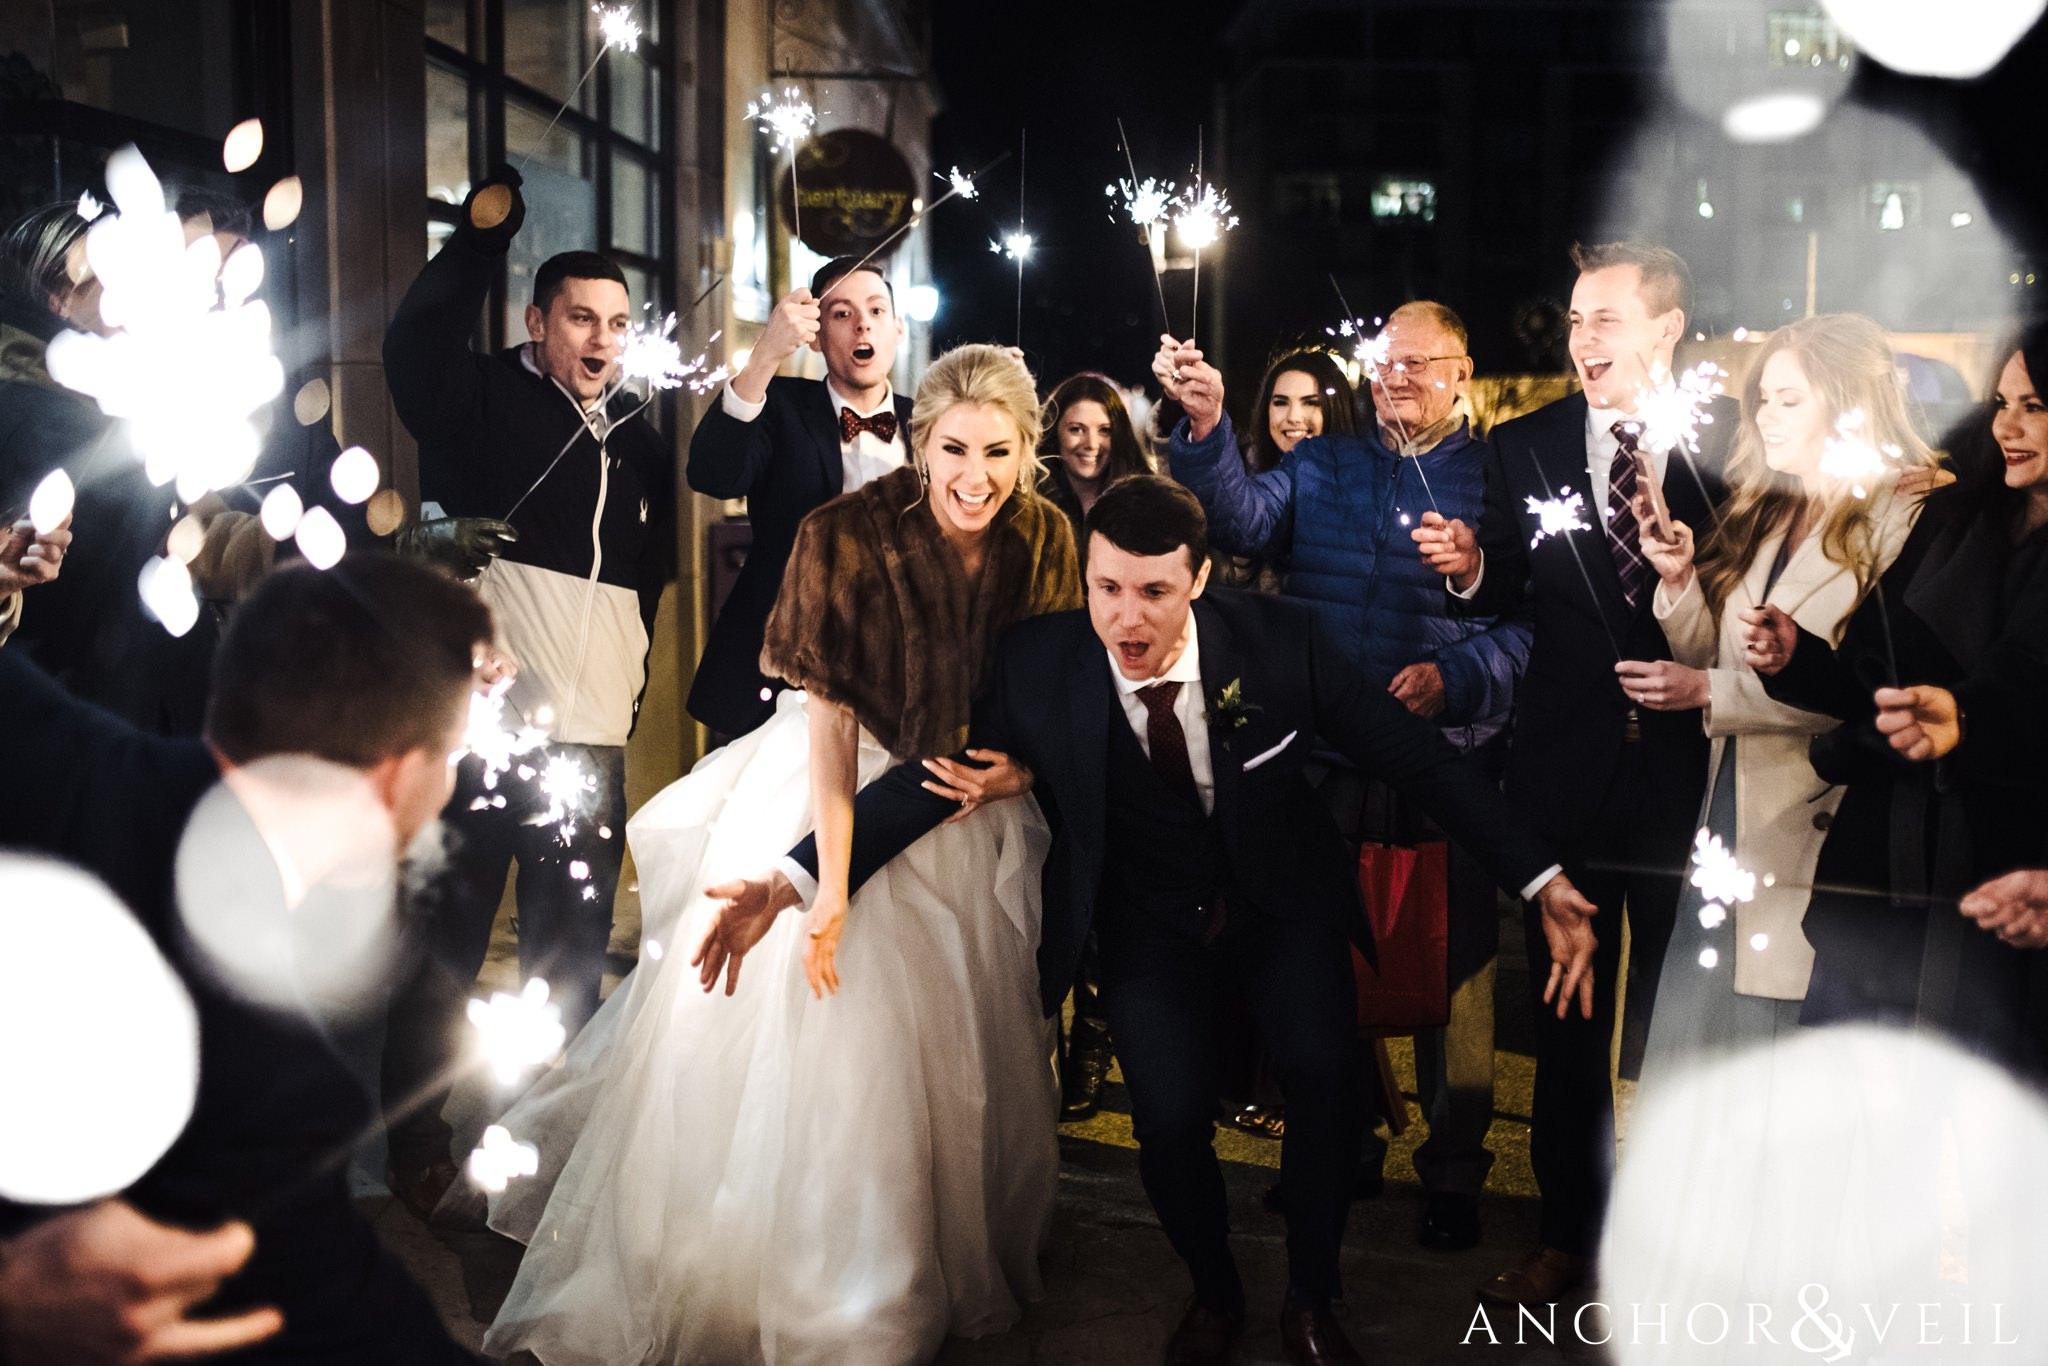 fun sparkler exit during their Downtown Asheville Wedding